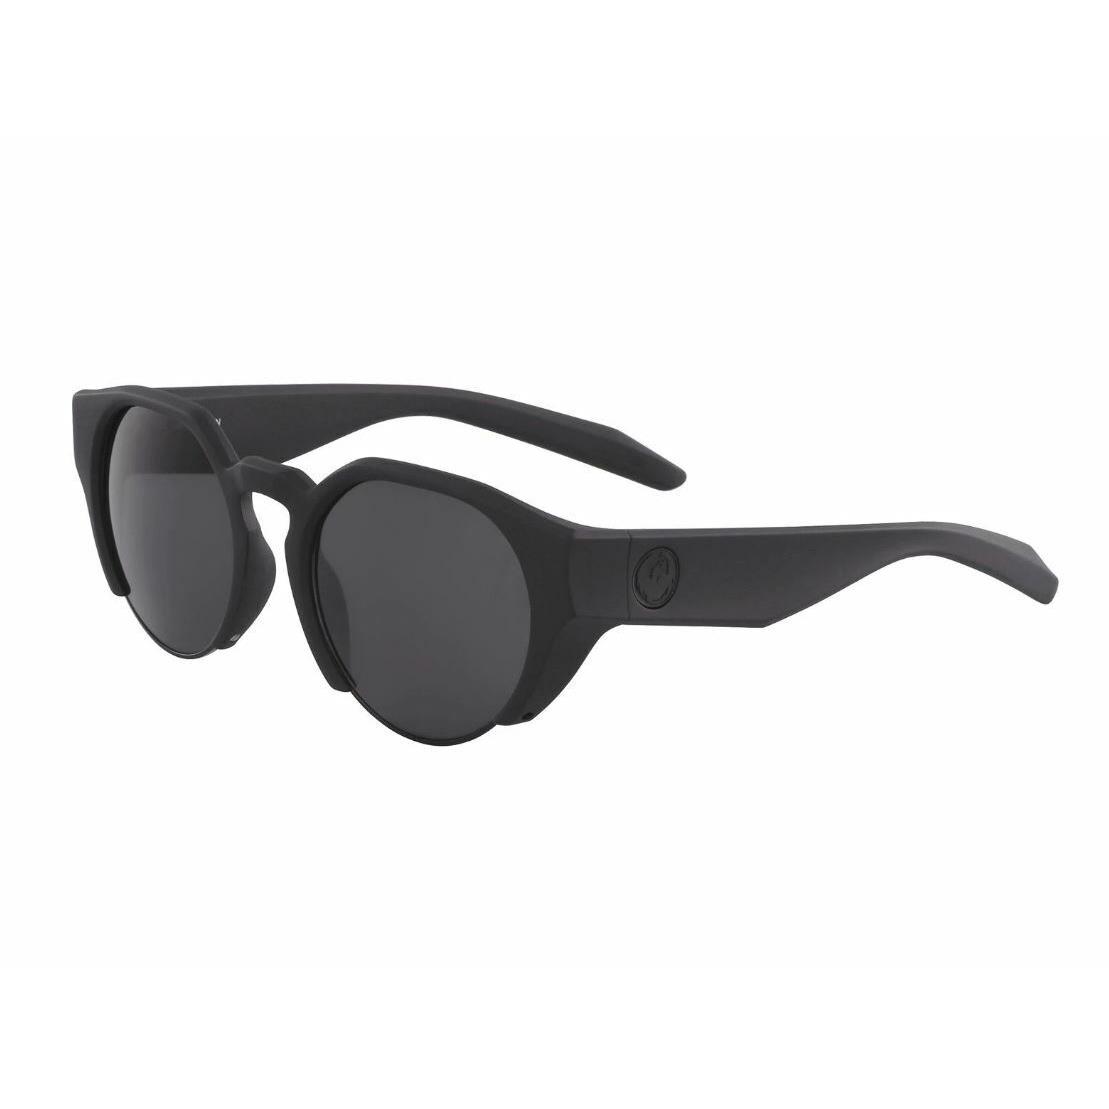 Dragon Compass Sunglasses Matte Black/ Grey UV Protection - Frame: Matte Black, Lens: Grey